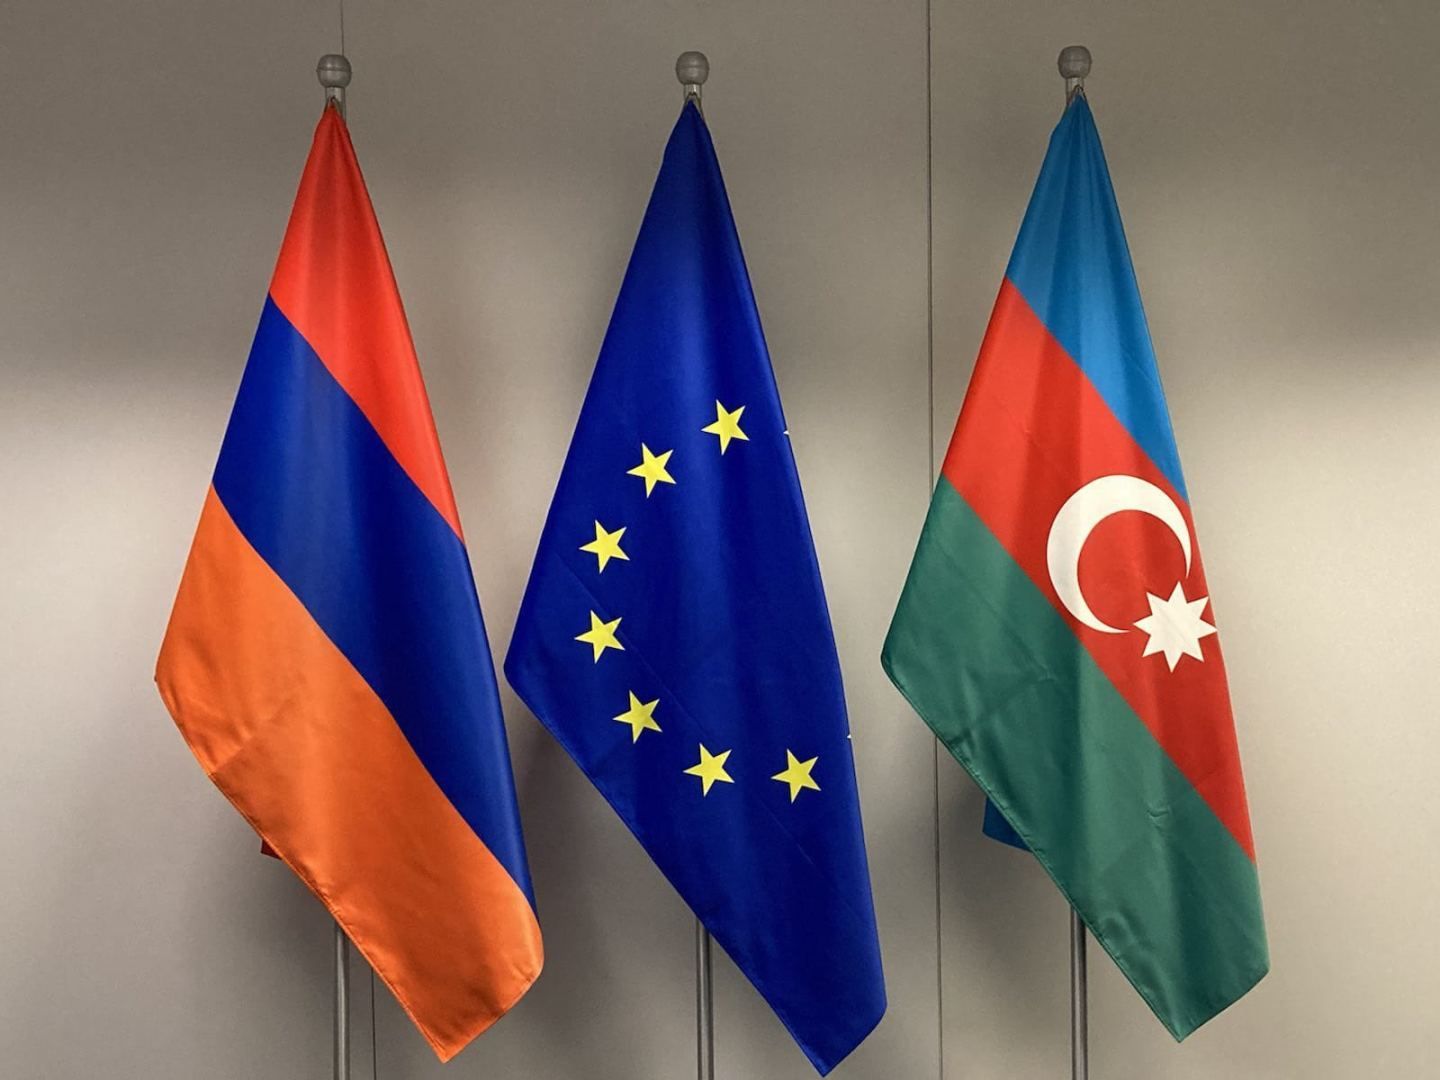 Setting Europe up against Azerbaijan backfires for Armenia